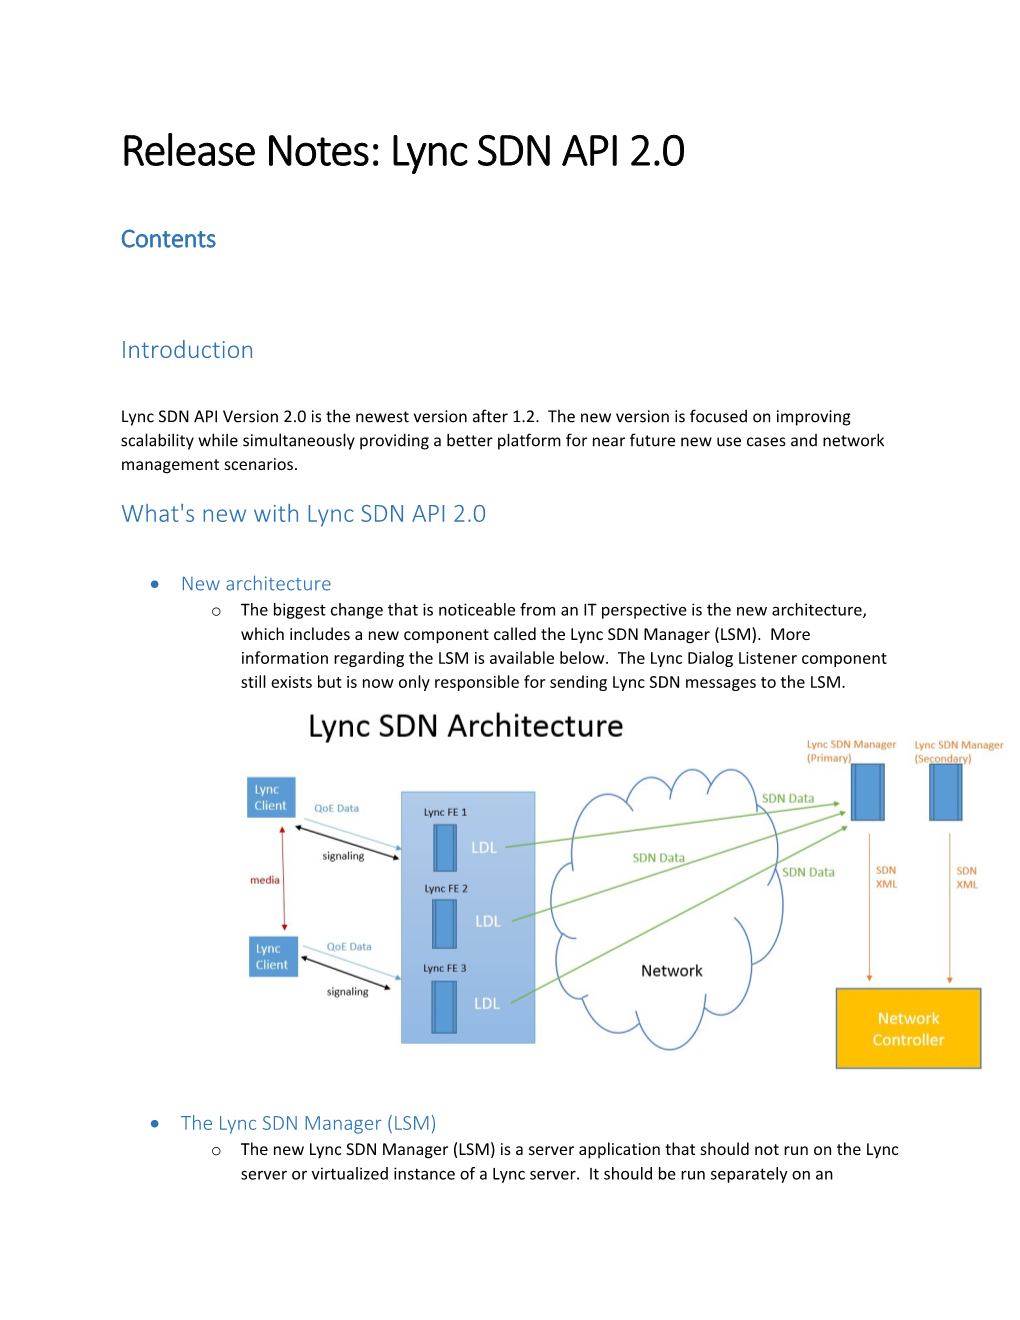 Lync SDN API 2.0 Release Notes